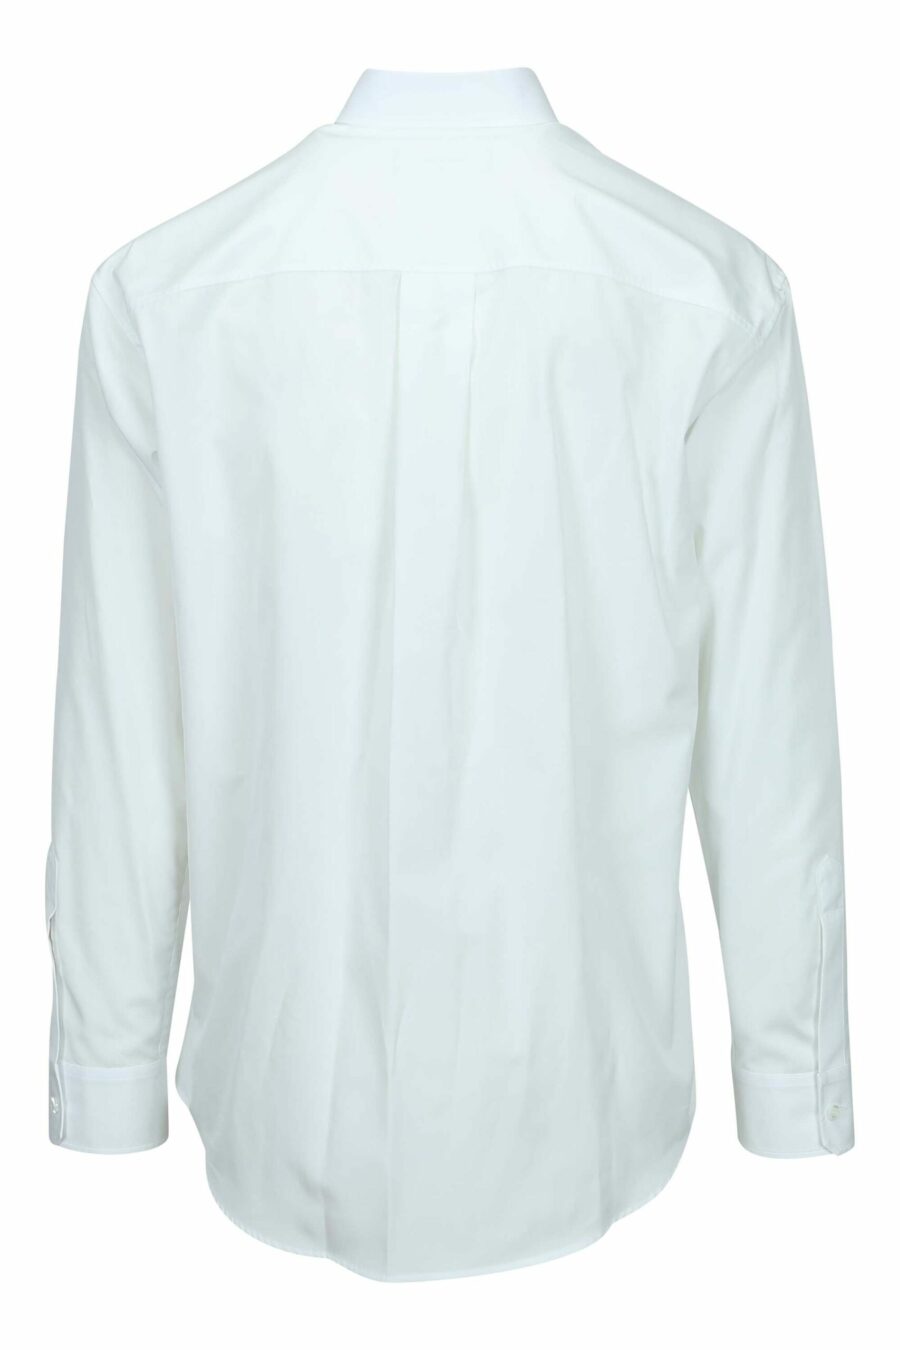 Camisa branca com mini-logotipo de ananás - 8054148528201 1 à escala